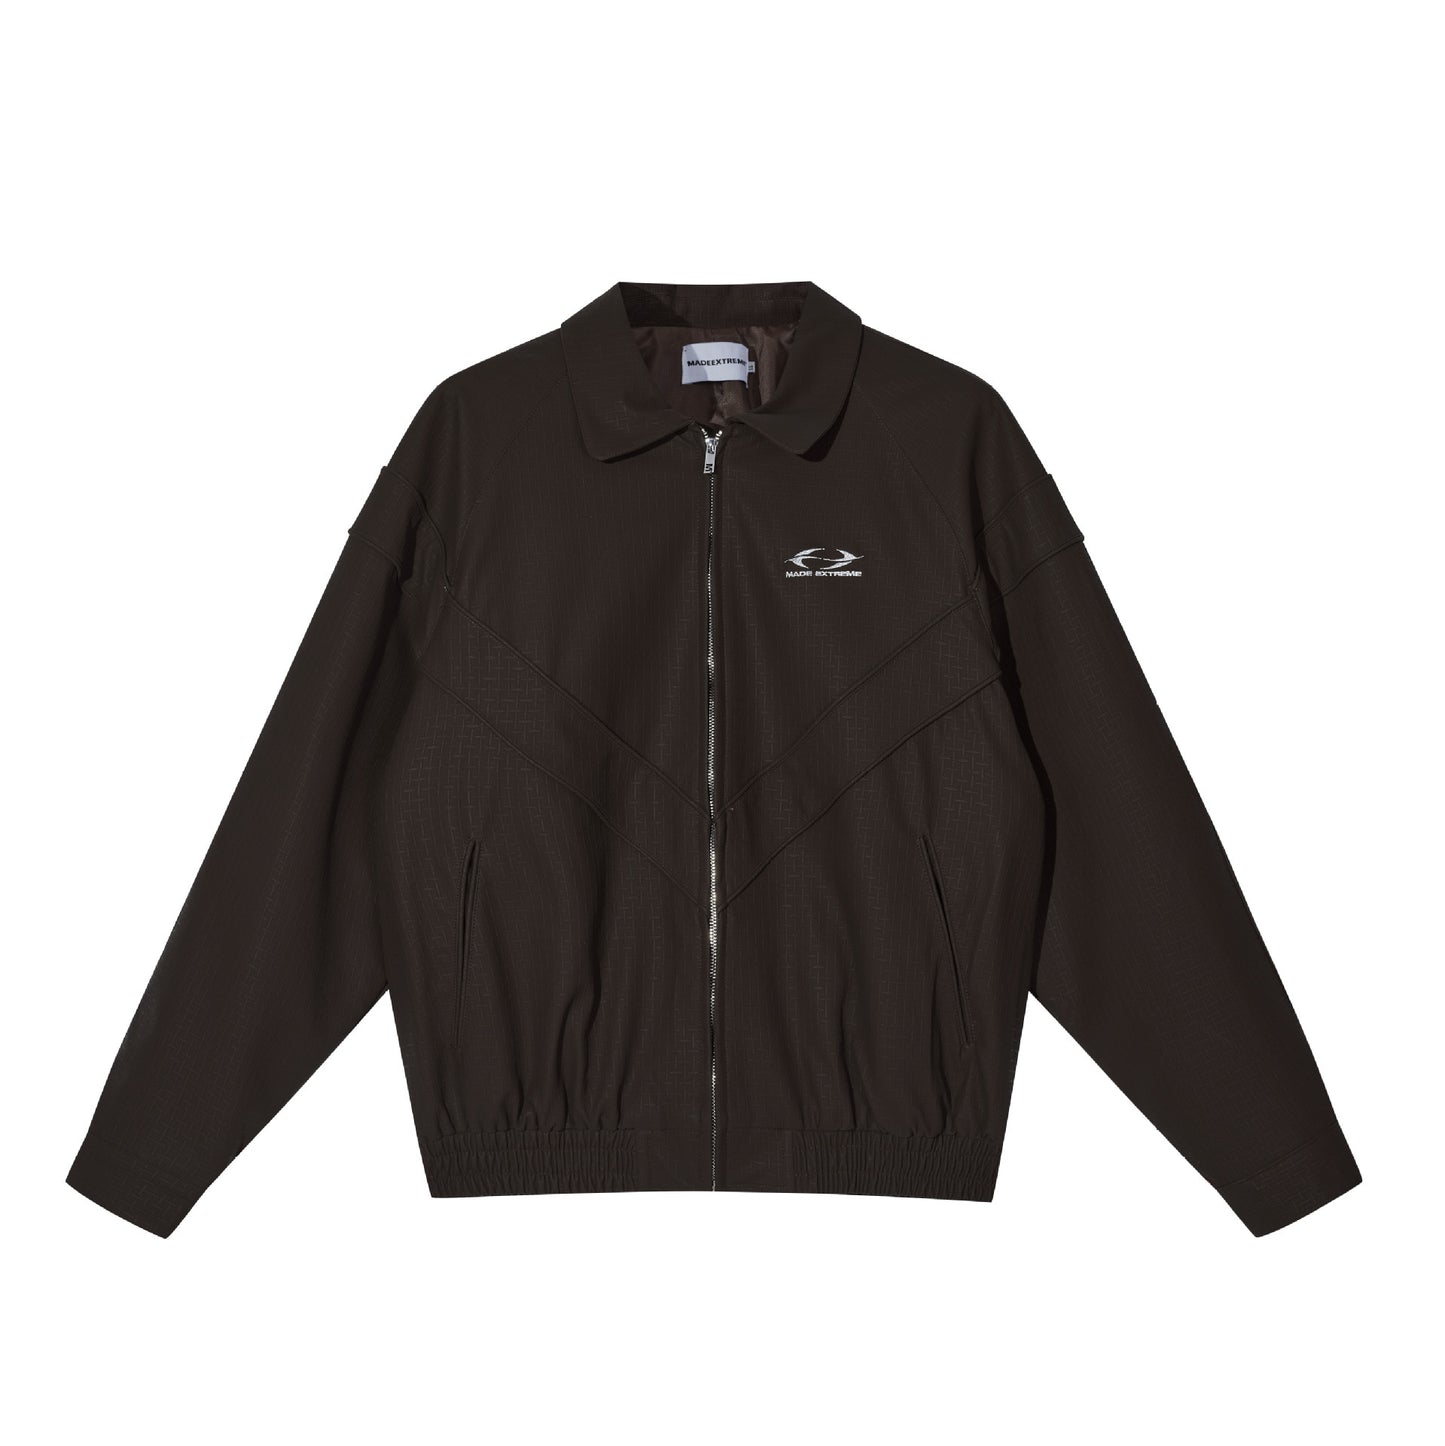 MADEEXTREME PU Leather Cleanfit Jacket